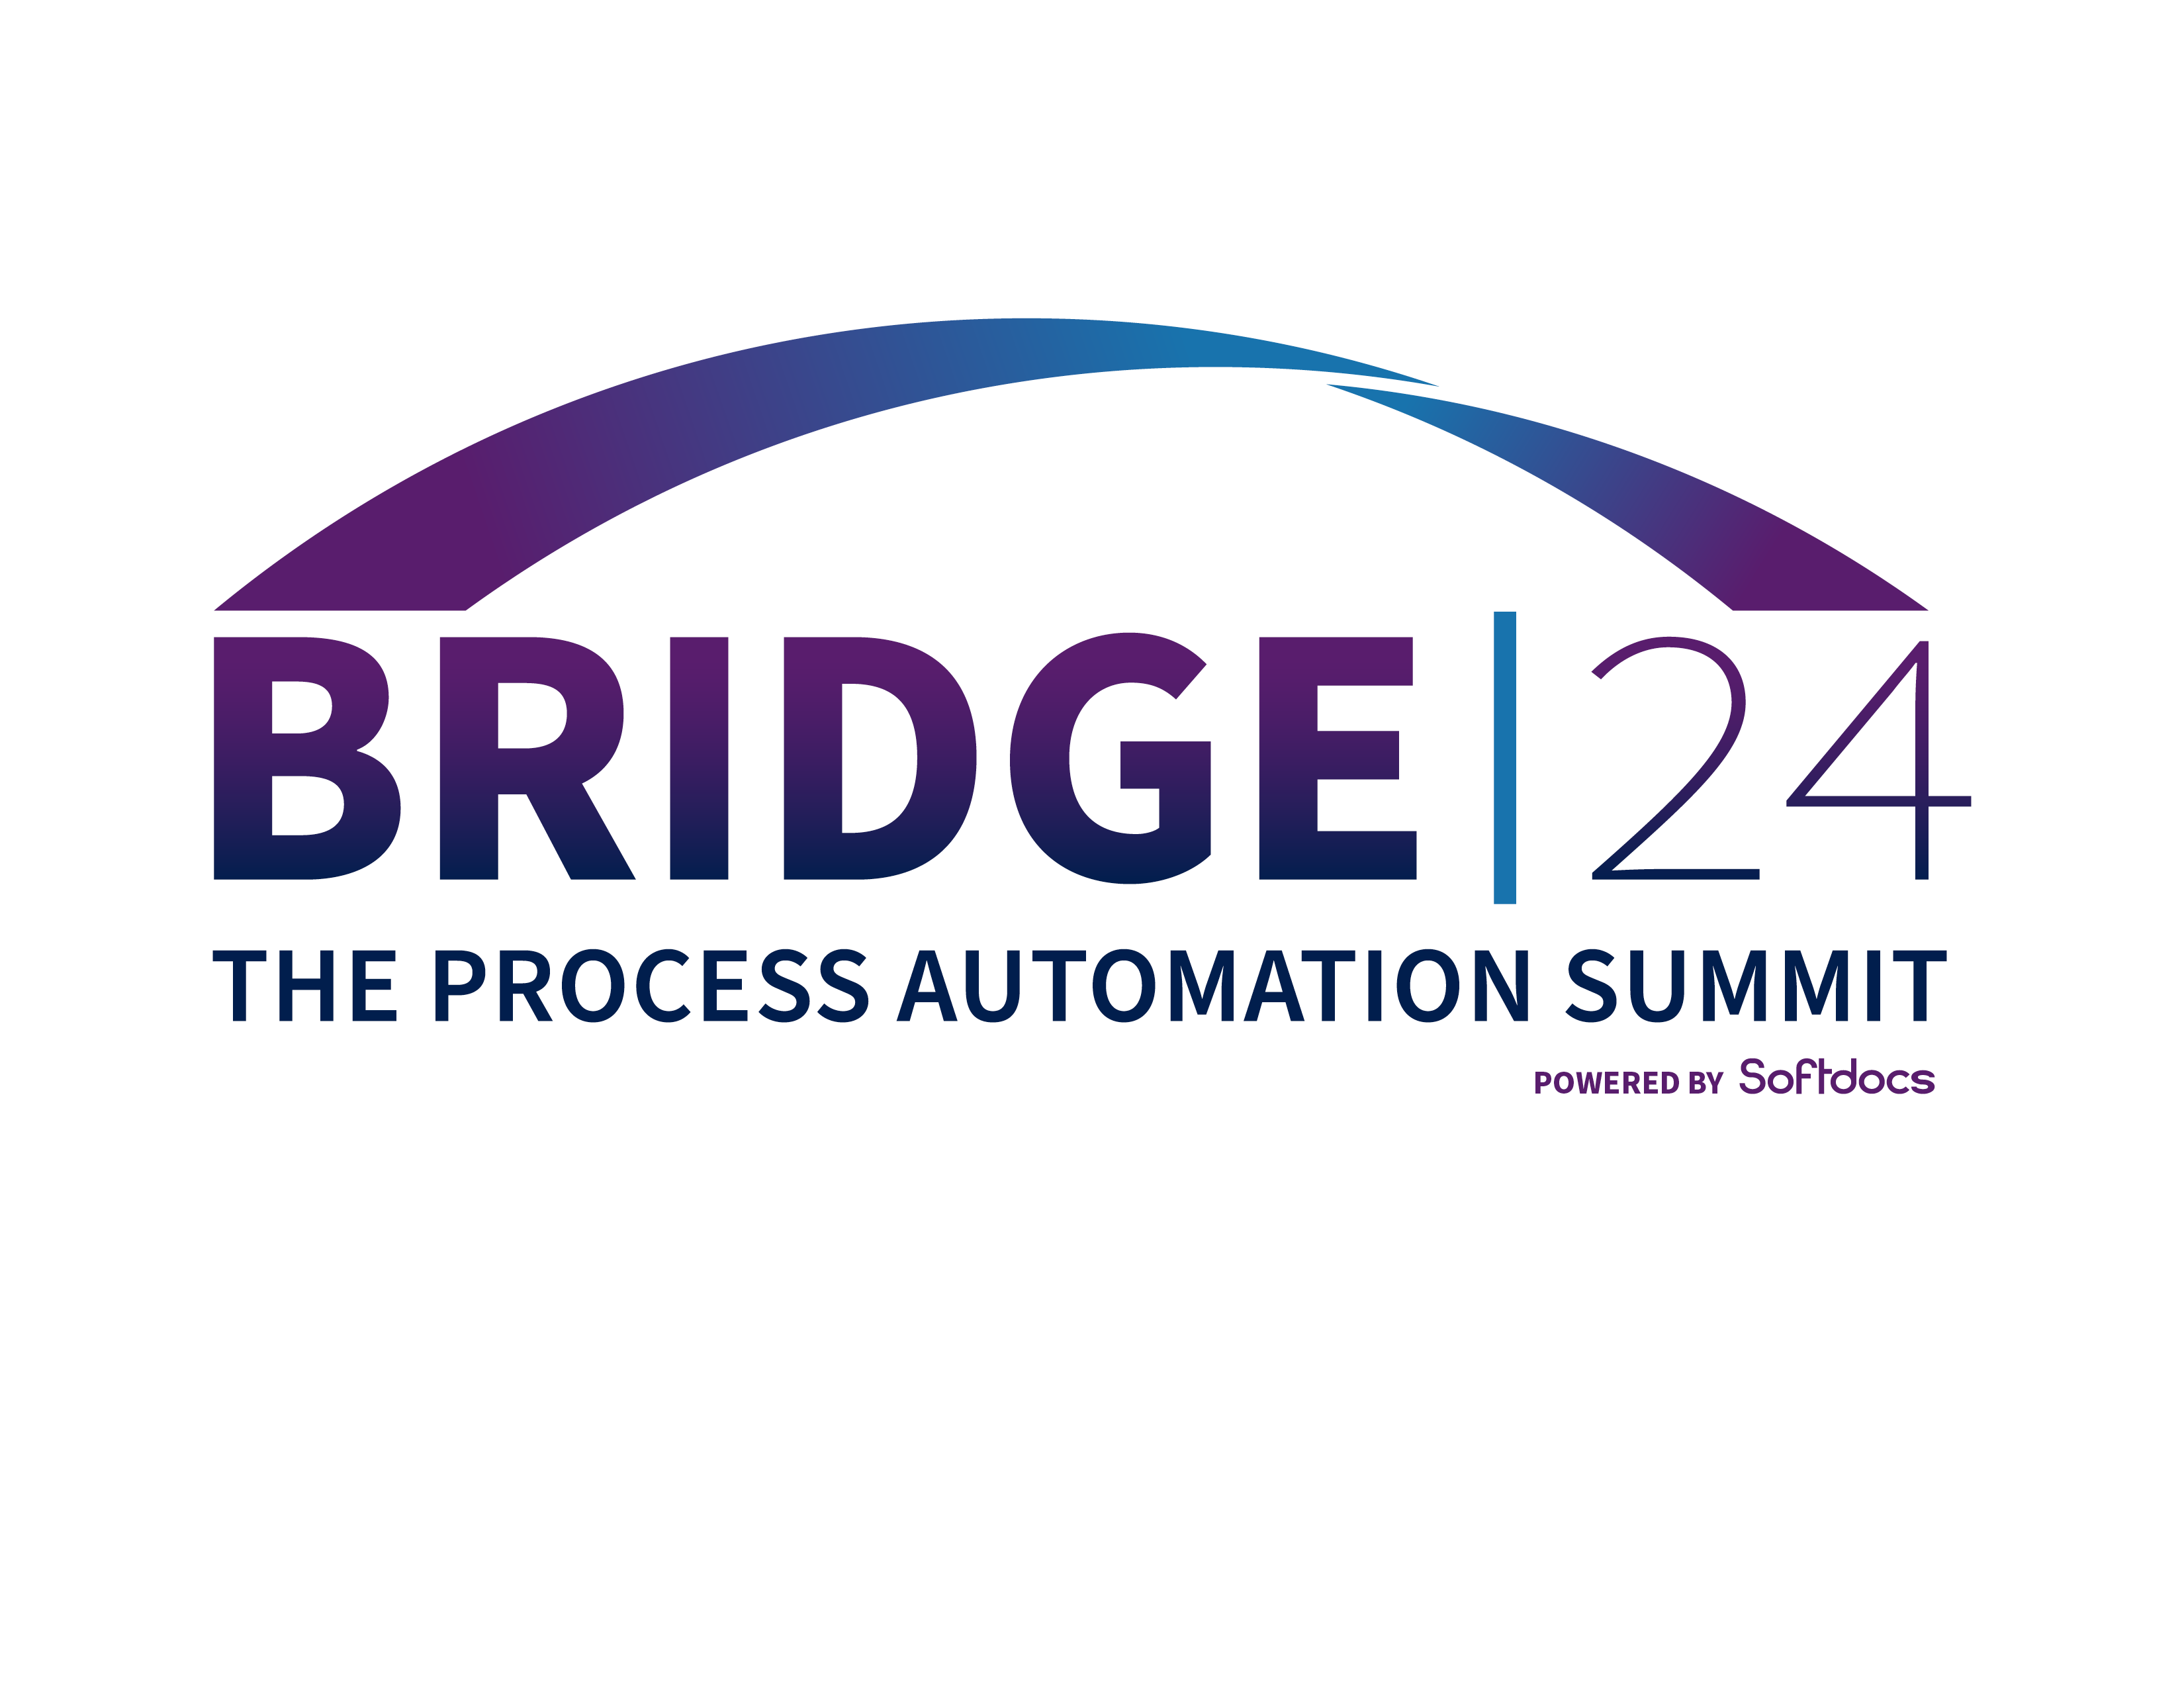 BRIDGE 24 The Process Automation Summit - Powered by Softdocs